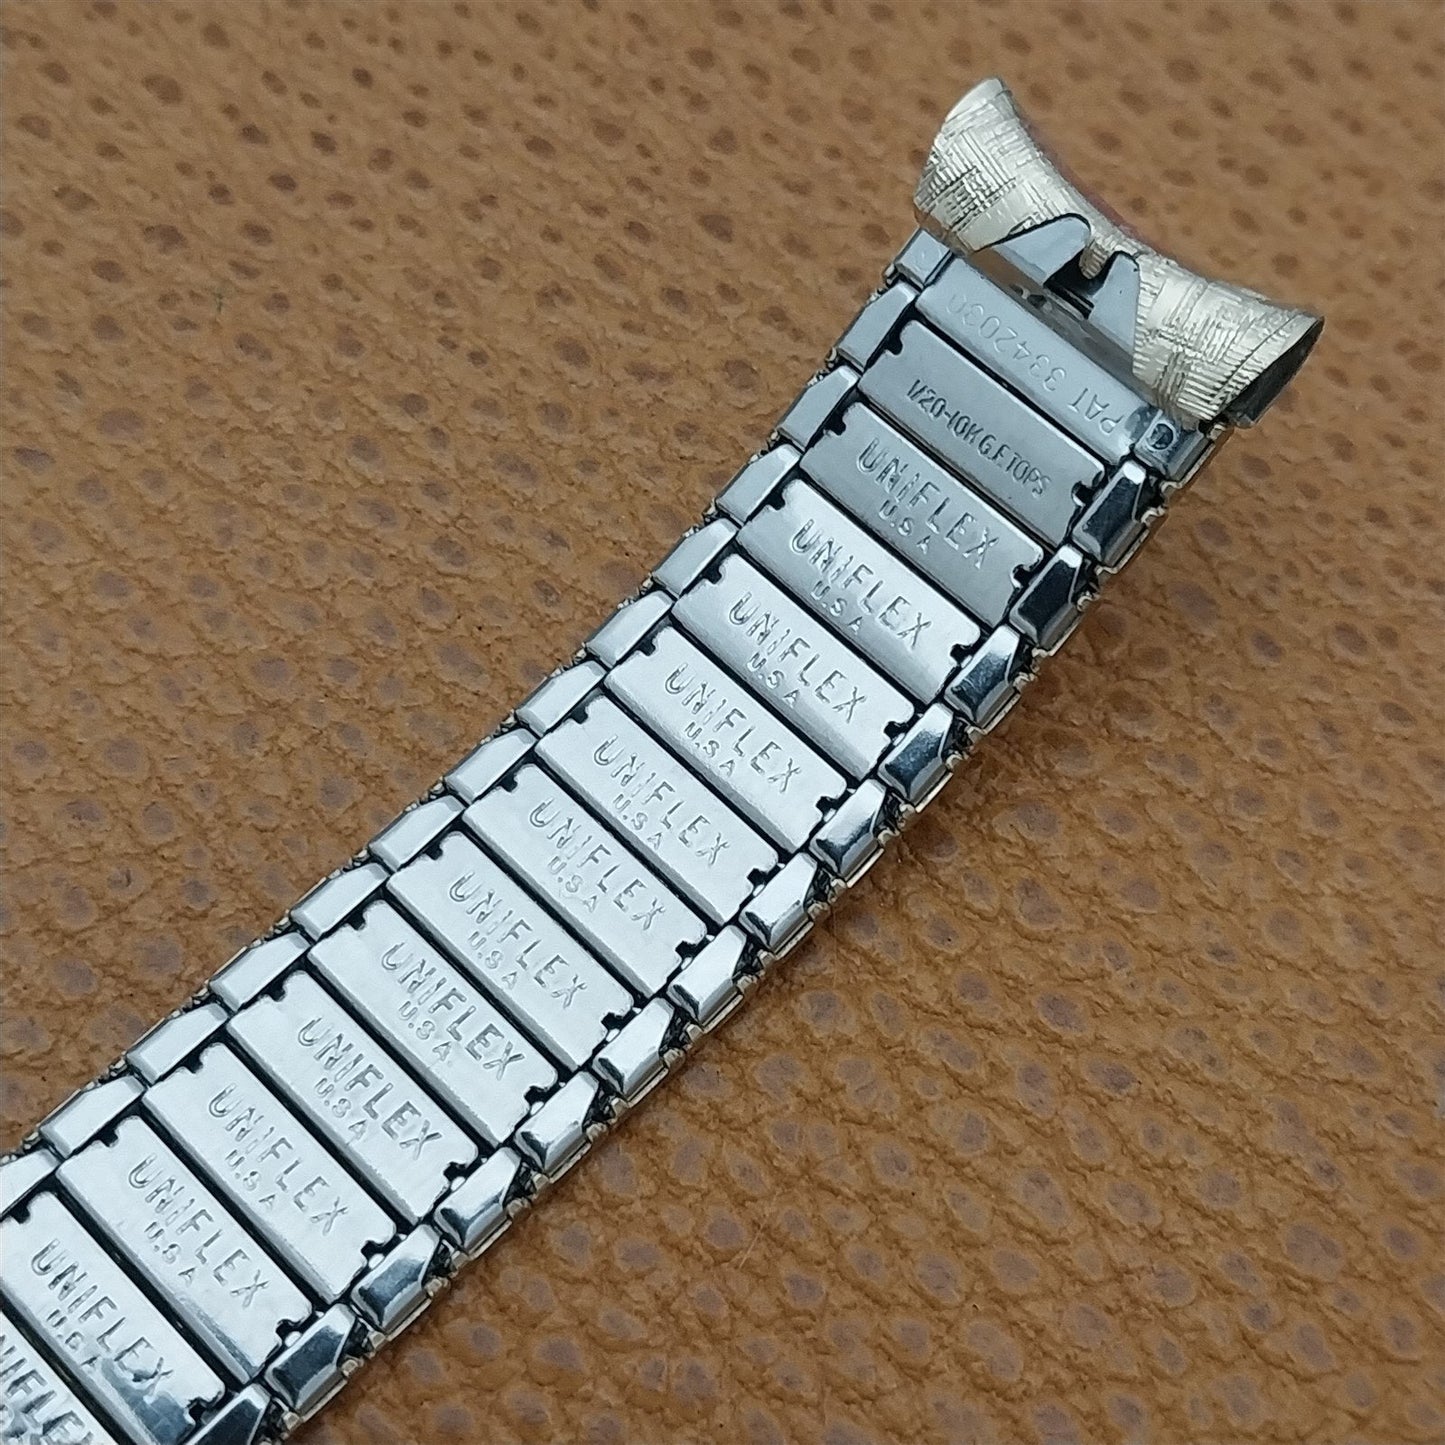 17.2mm 17mm 10k Gold-Fill Uniflex Slim Expansion Unused 1960s Vintage Watch Band